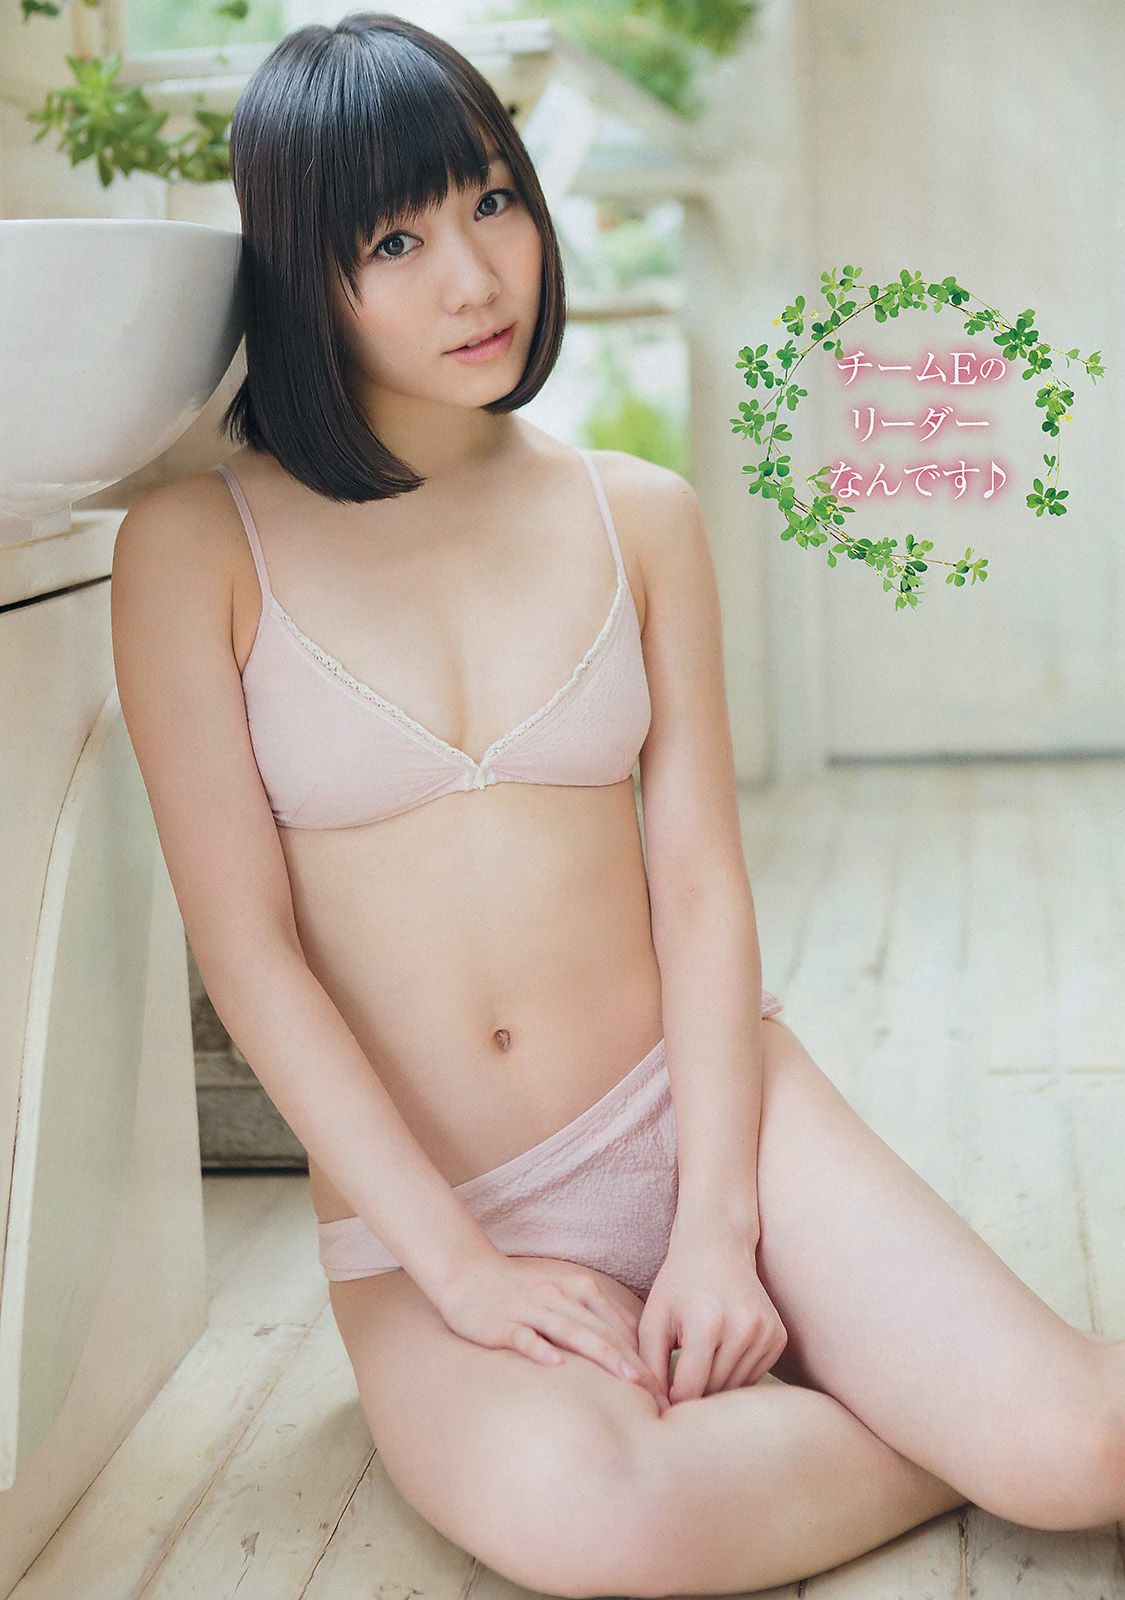 [Jeune Champion] Akari Suda Mai Hakase 2014 Photographie n ° 19 Page 3 No.7445c3